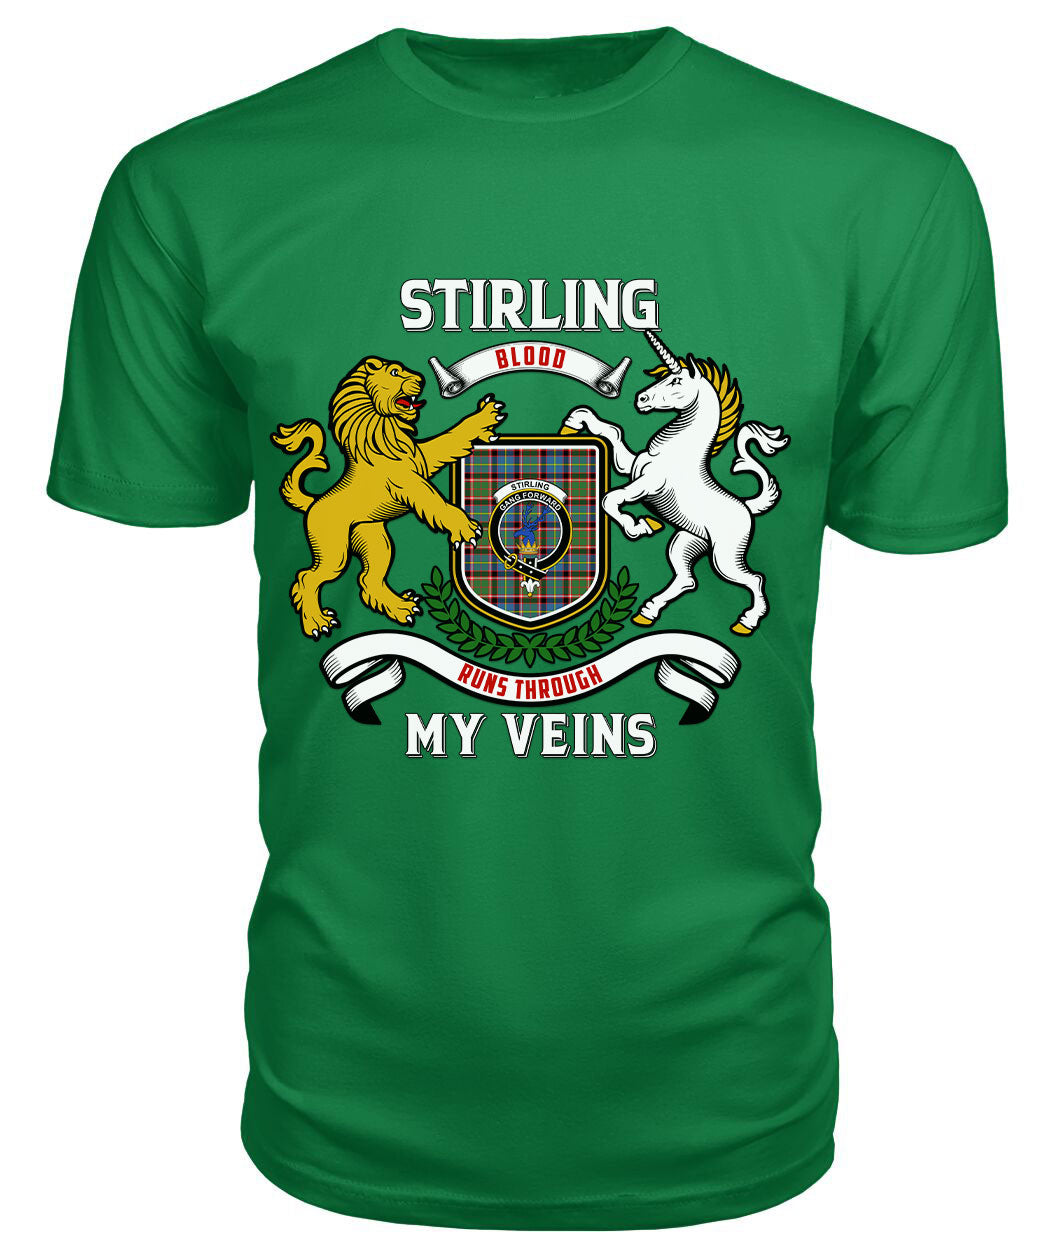 Stirling (of Cadder-Present Chief) Tartan Crest 2D T-shirt - Blood Runs Through My Veins Style